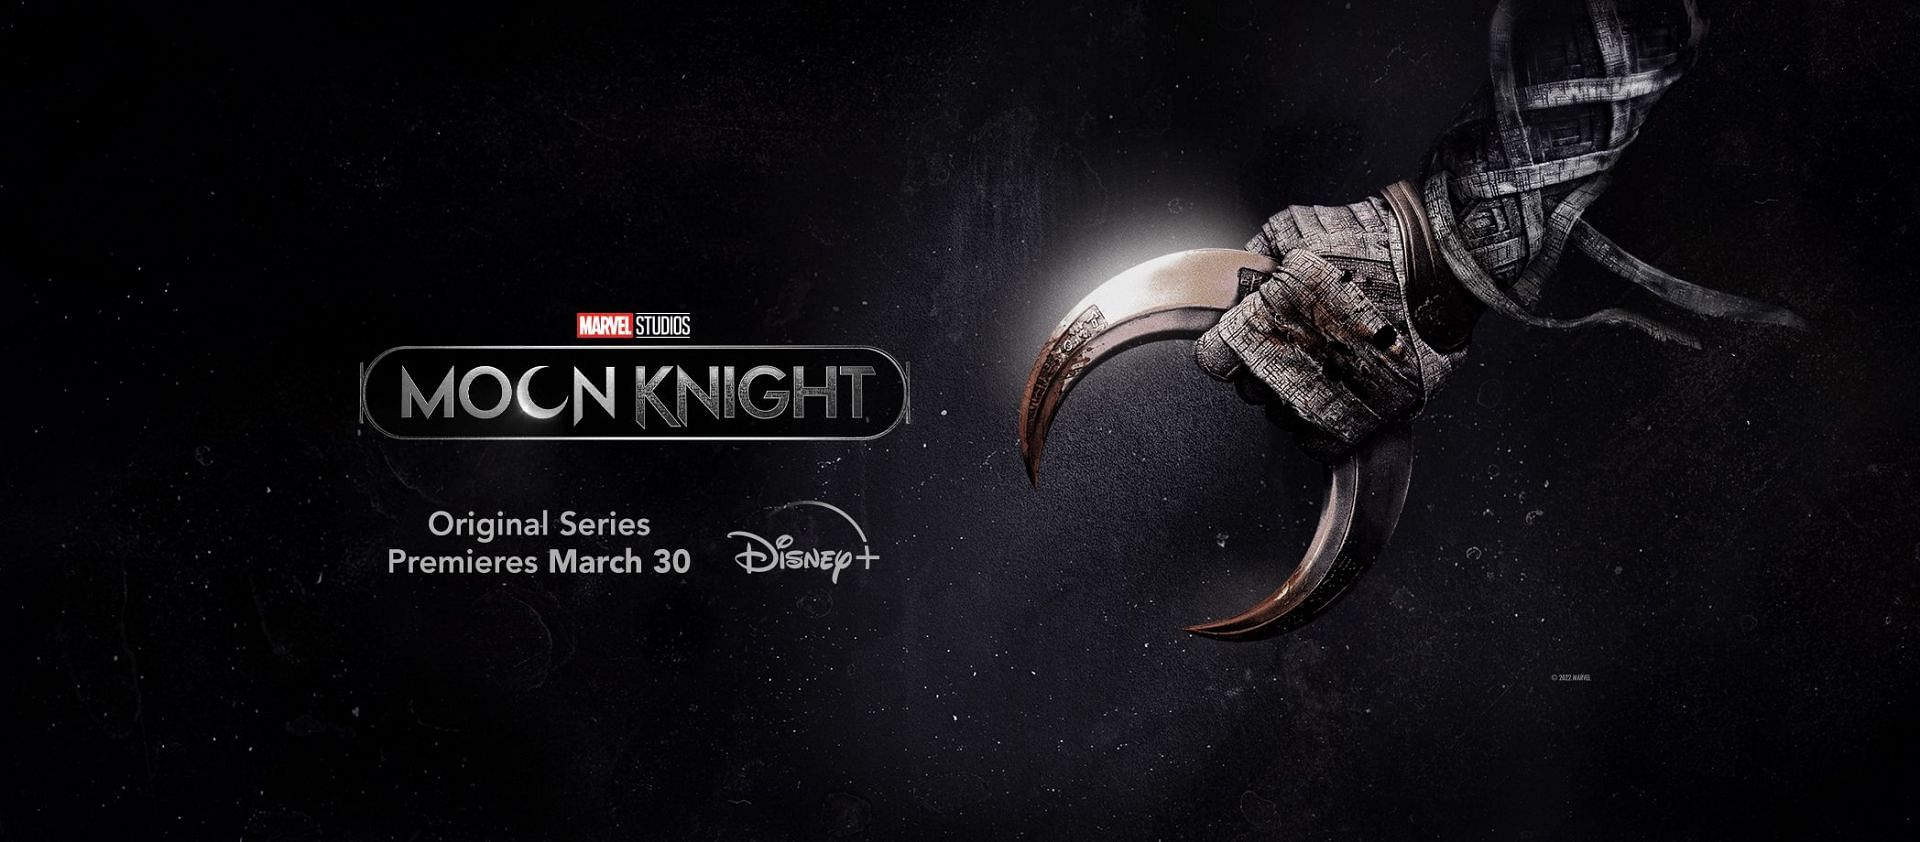 Moon Knight premiers March 30 (Image via Disney+)